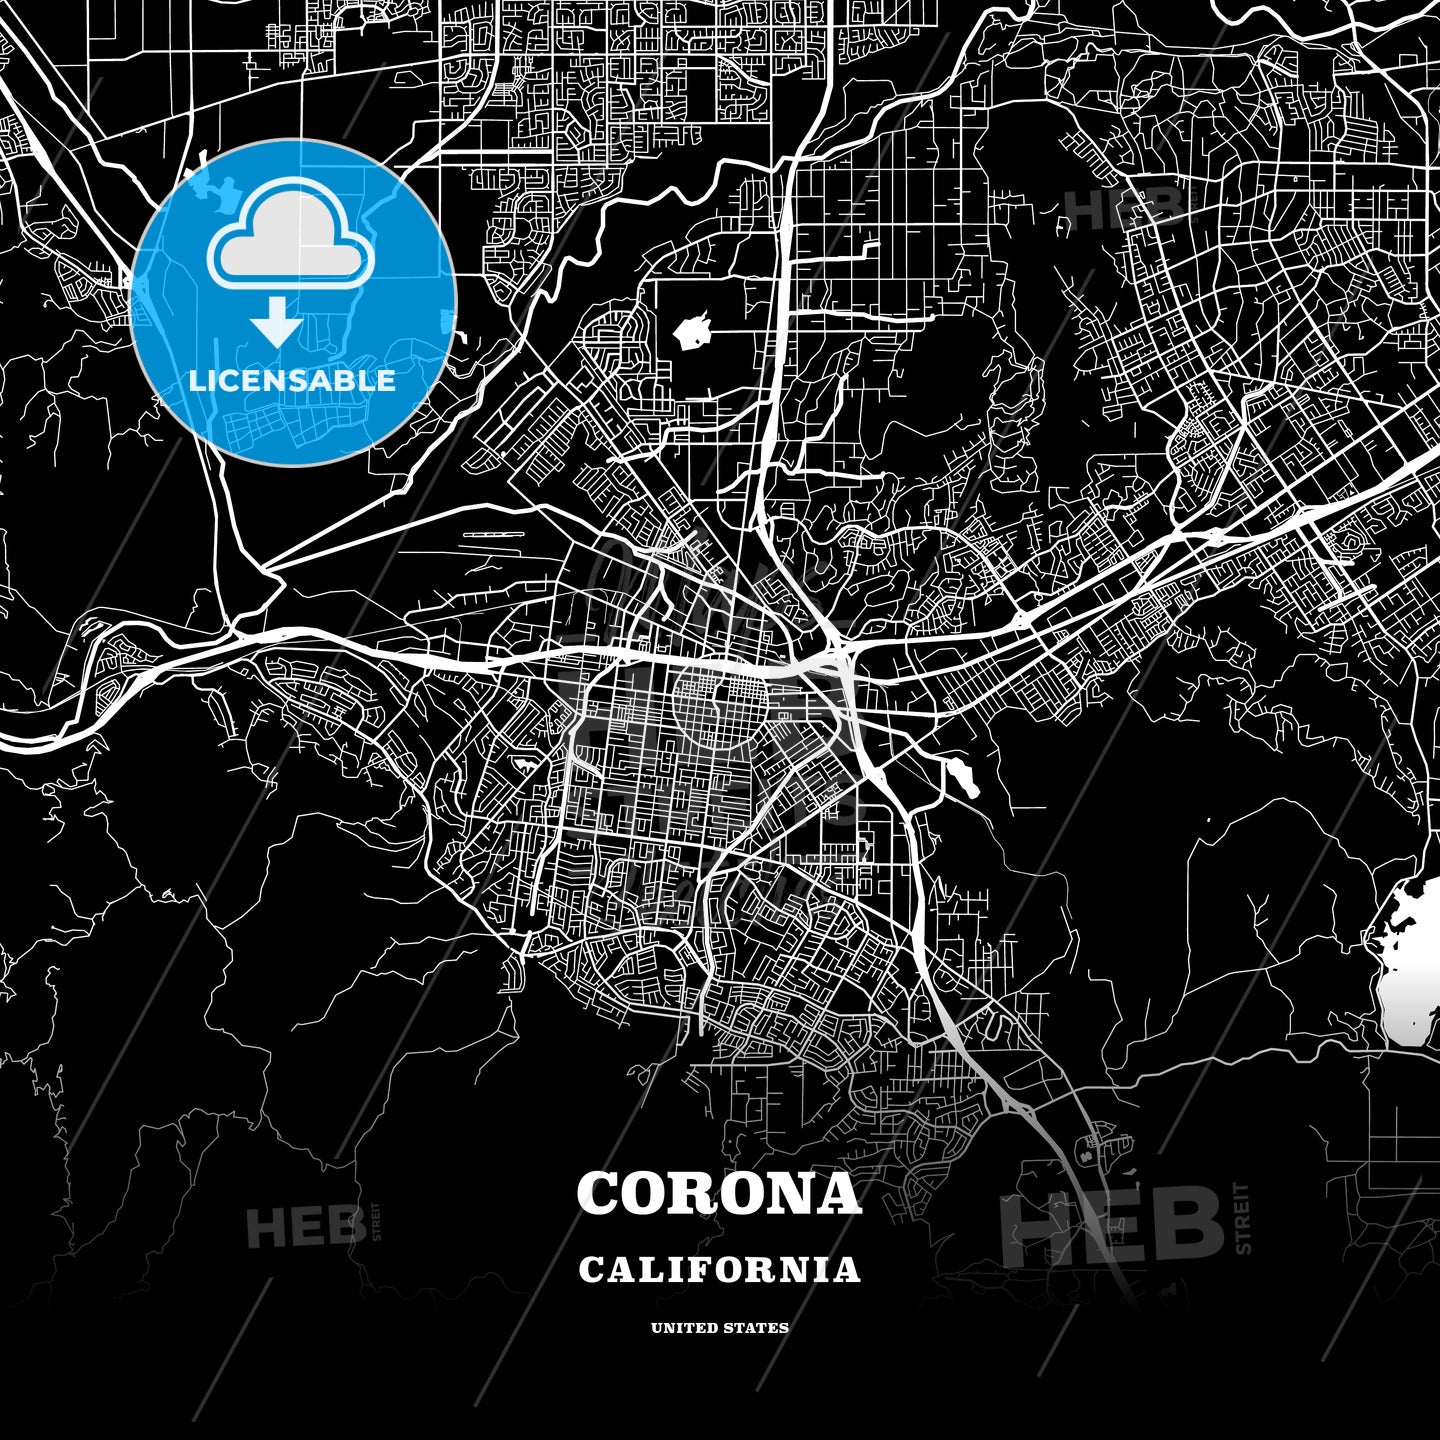 Corona, California, USA map